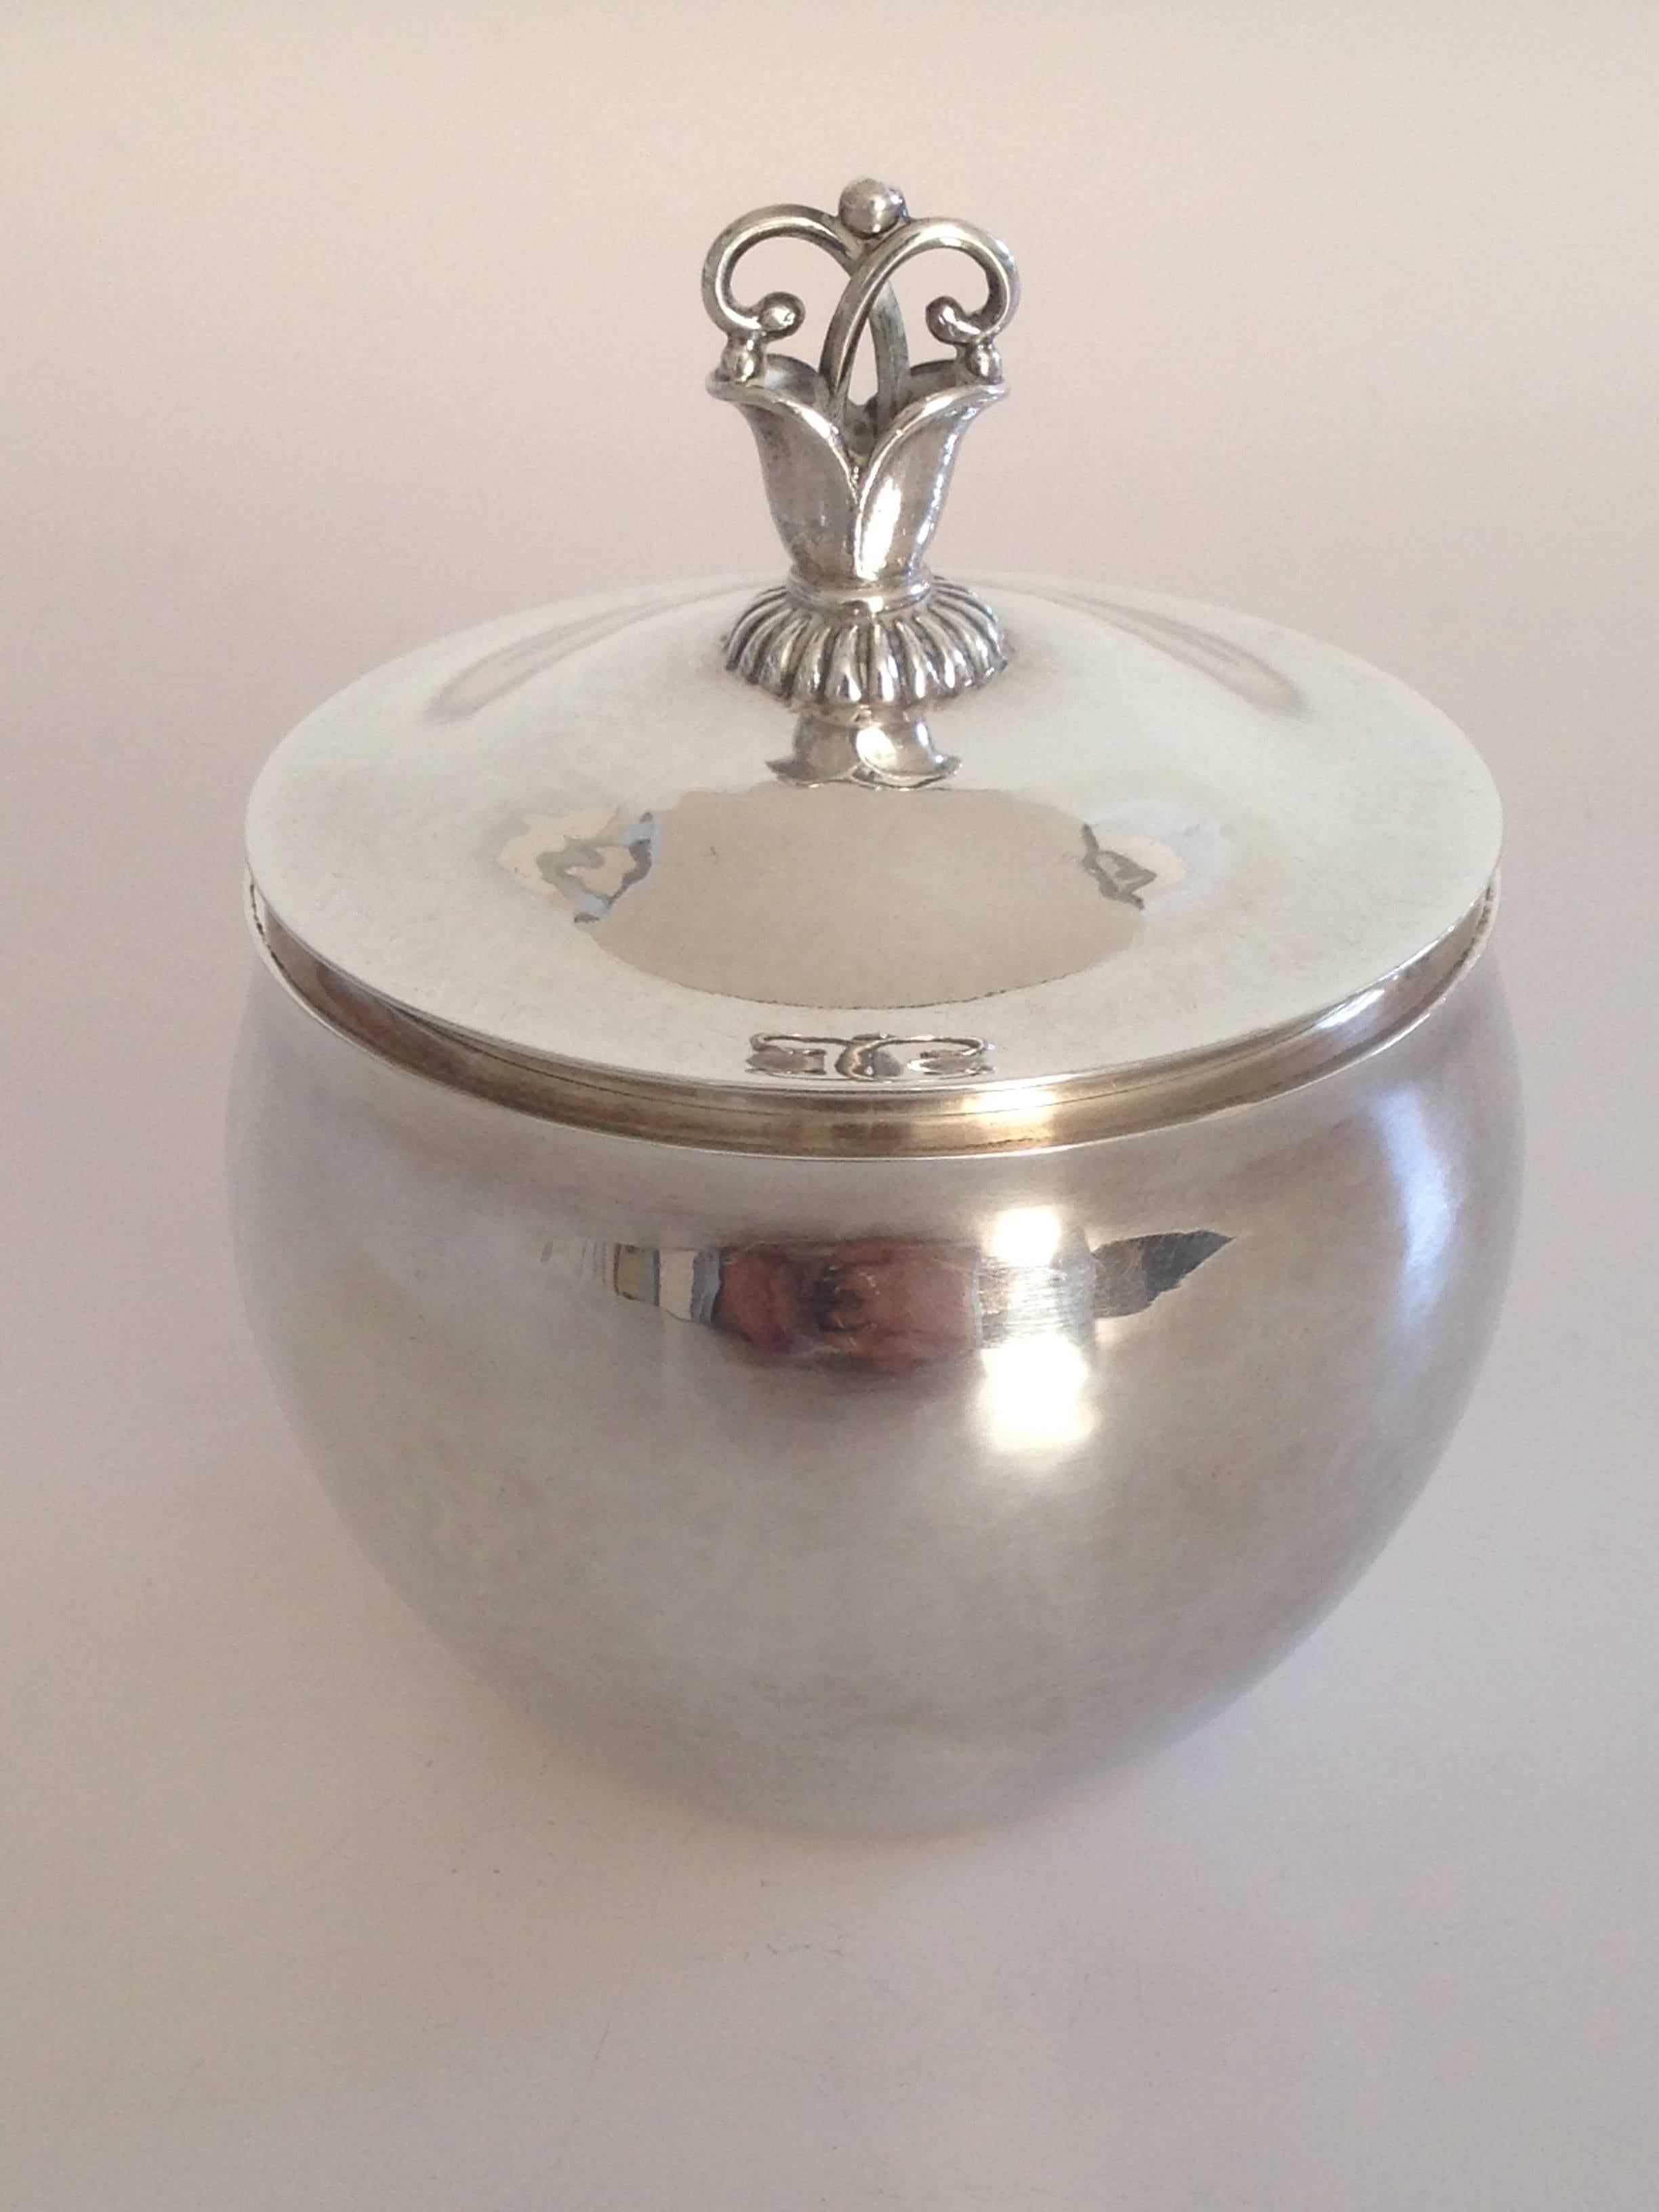 Georg Jensen sterling silver lidded bowl by Harald Nielsen #172C. 

Measures 9.5cm / 3 3/4